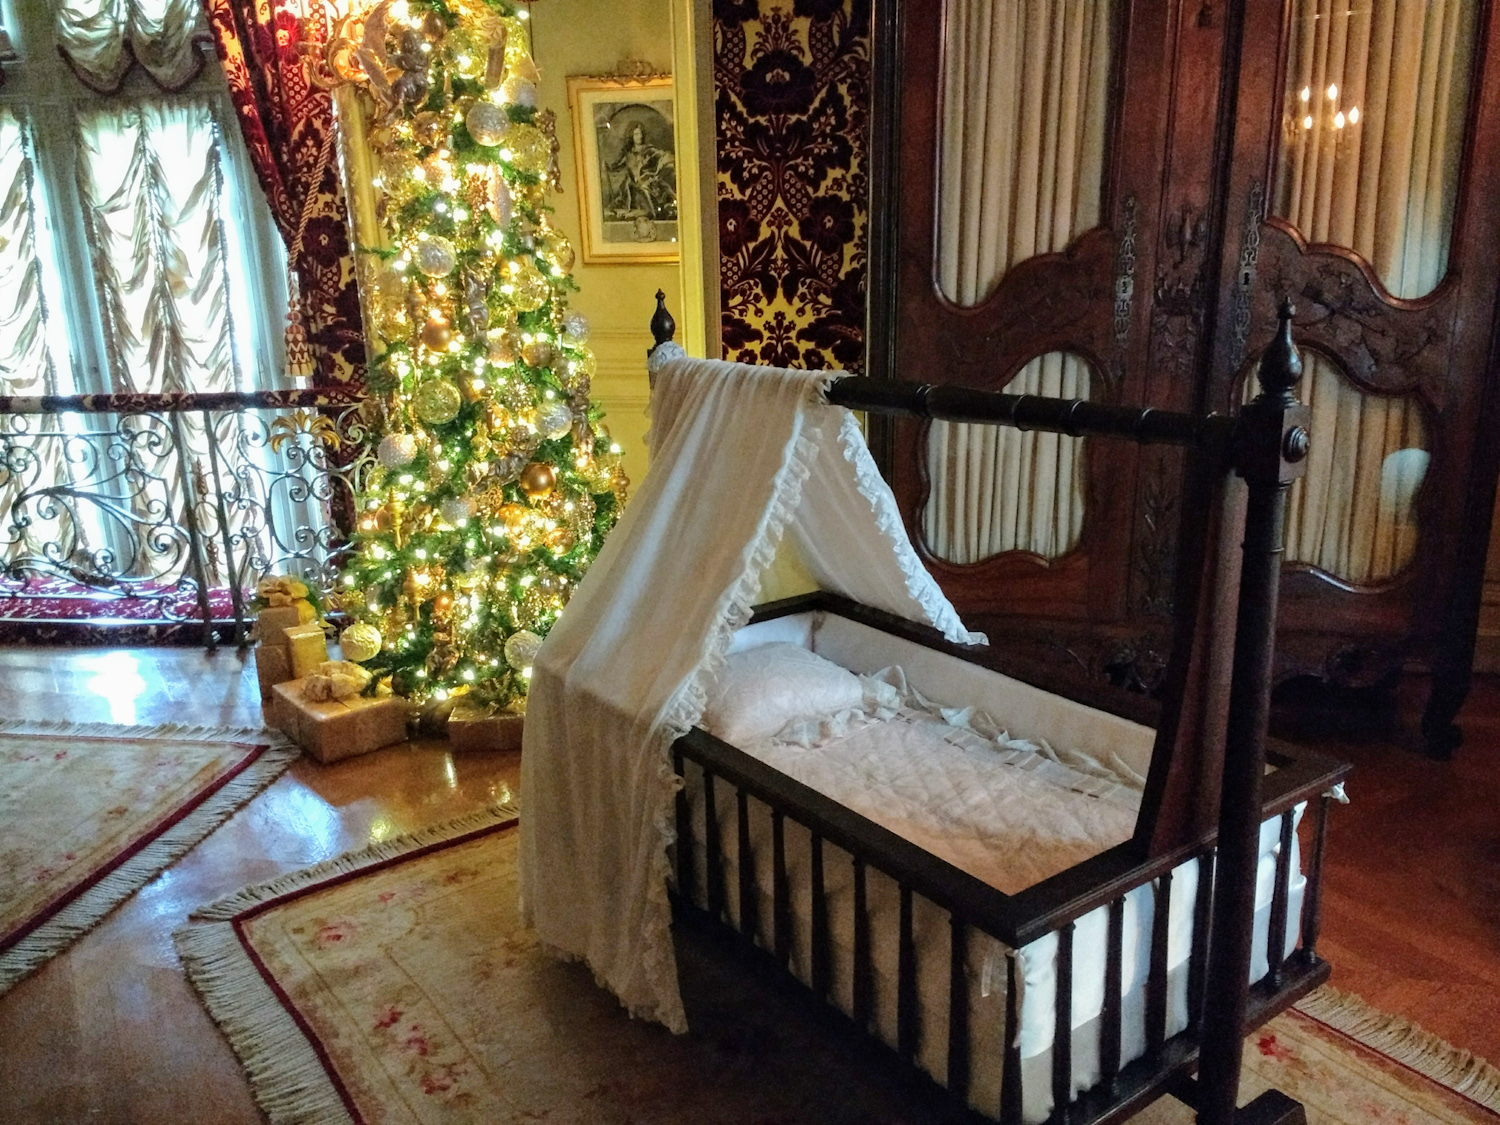 Louis XV guest room-Edith Vanderbilt gave birth to daughter Cornelia and convalesced here